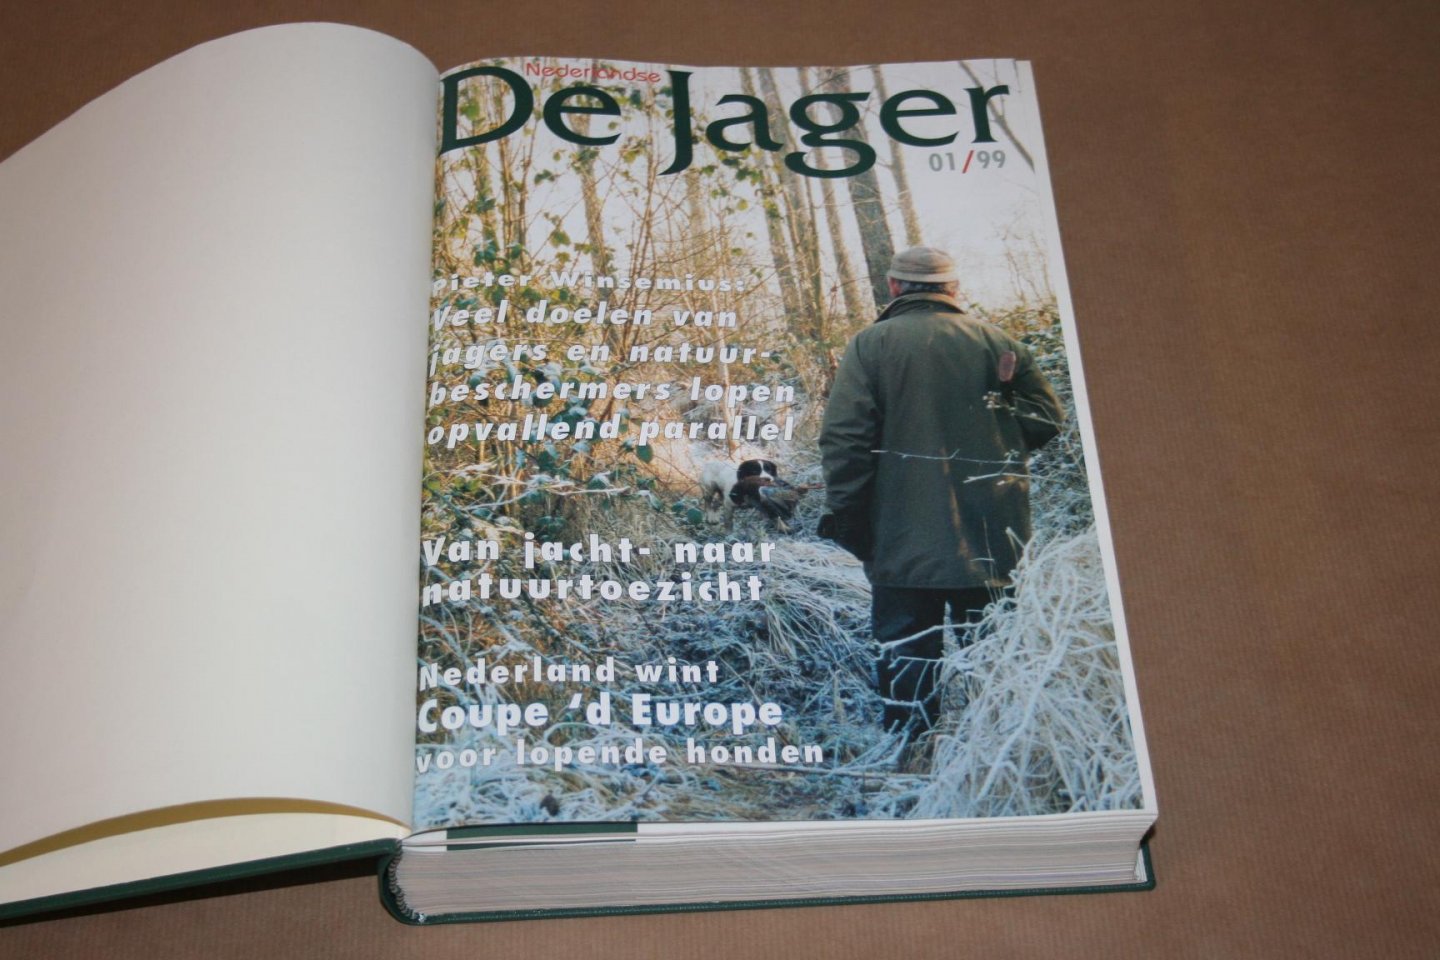  - De Nederlandse Jager - Complete jaargang 1999